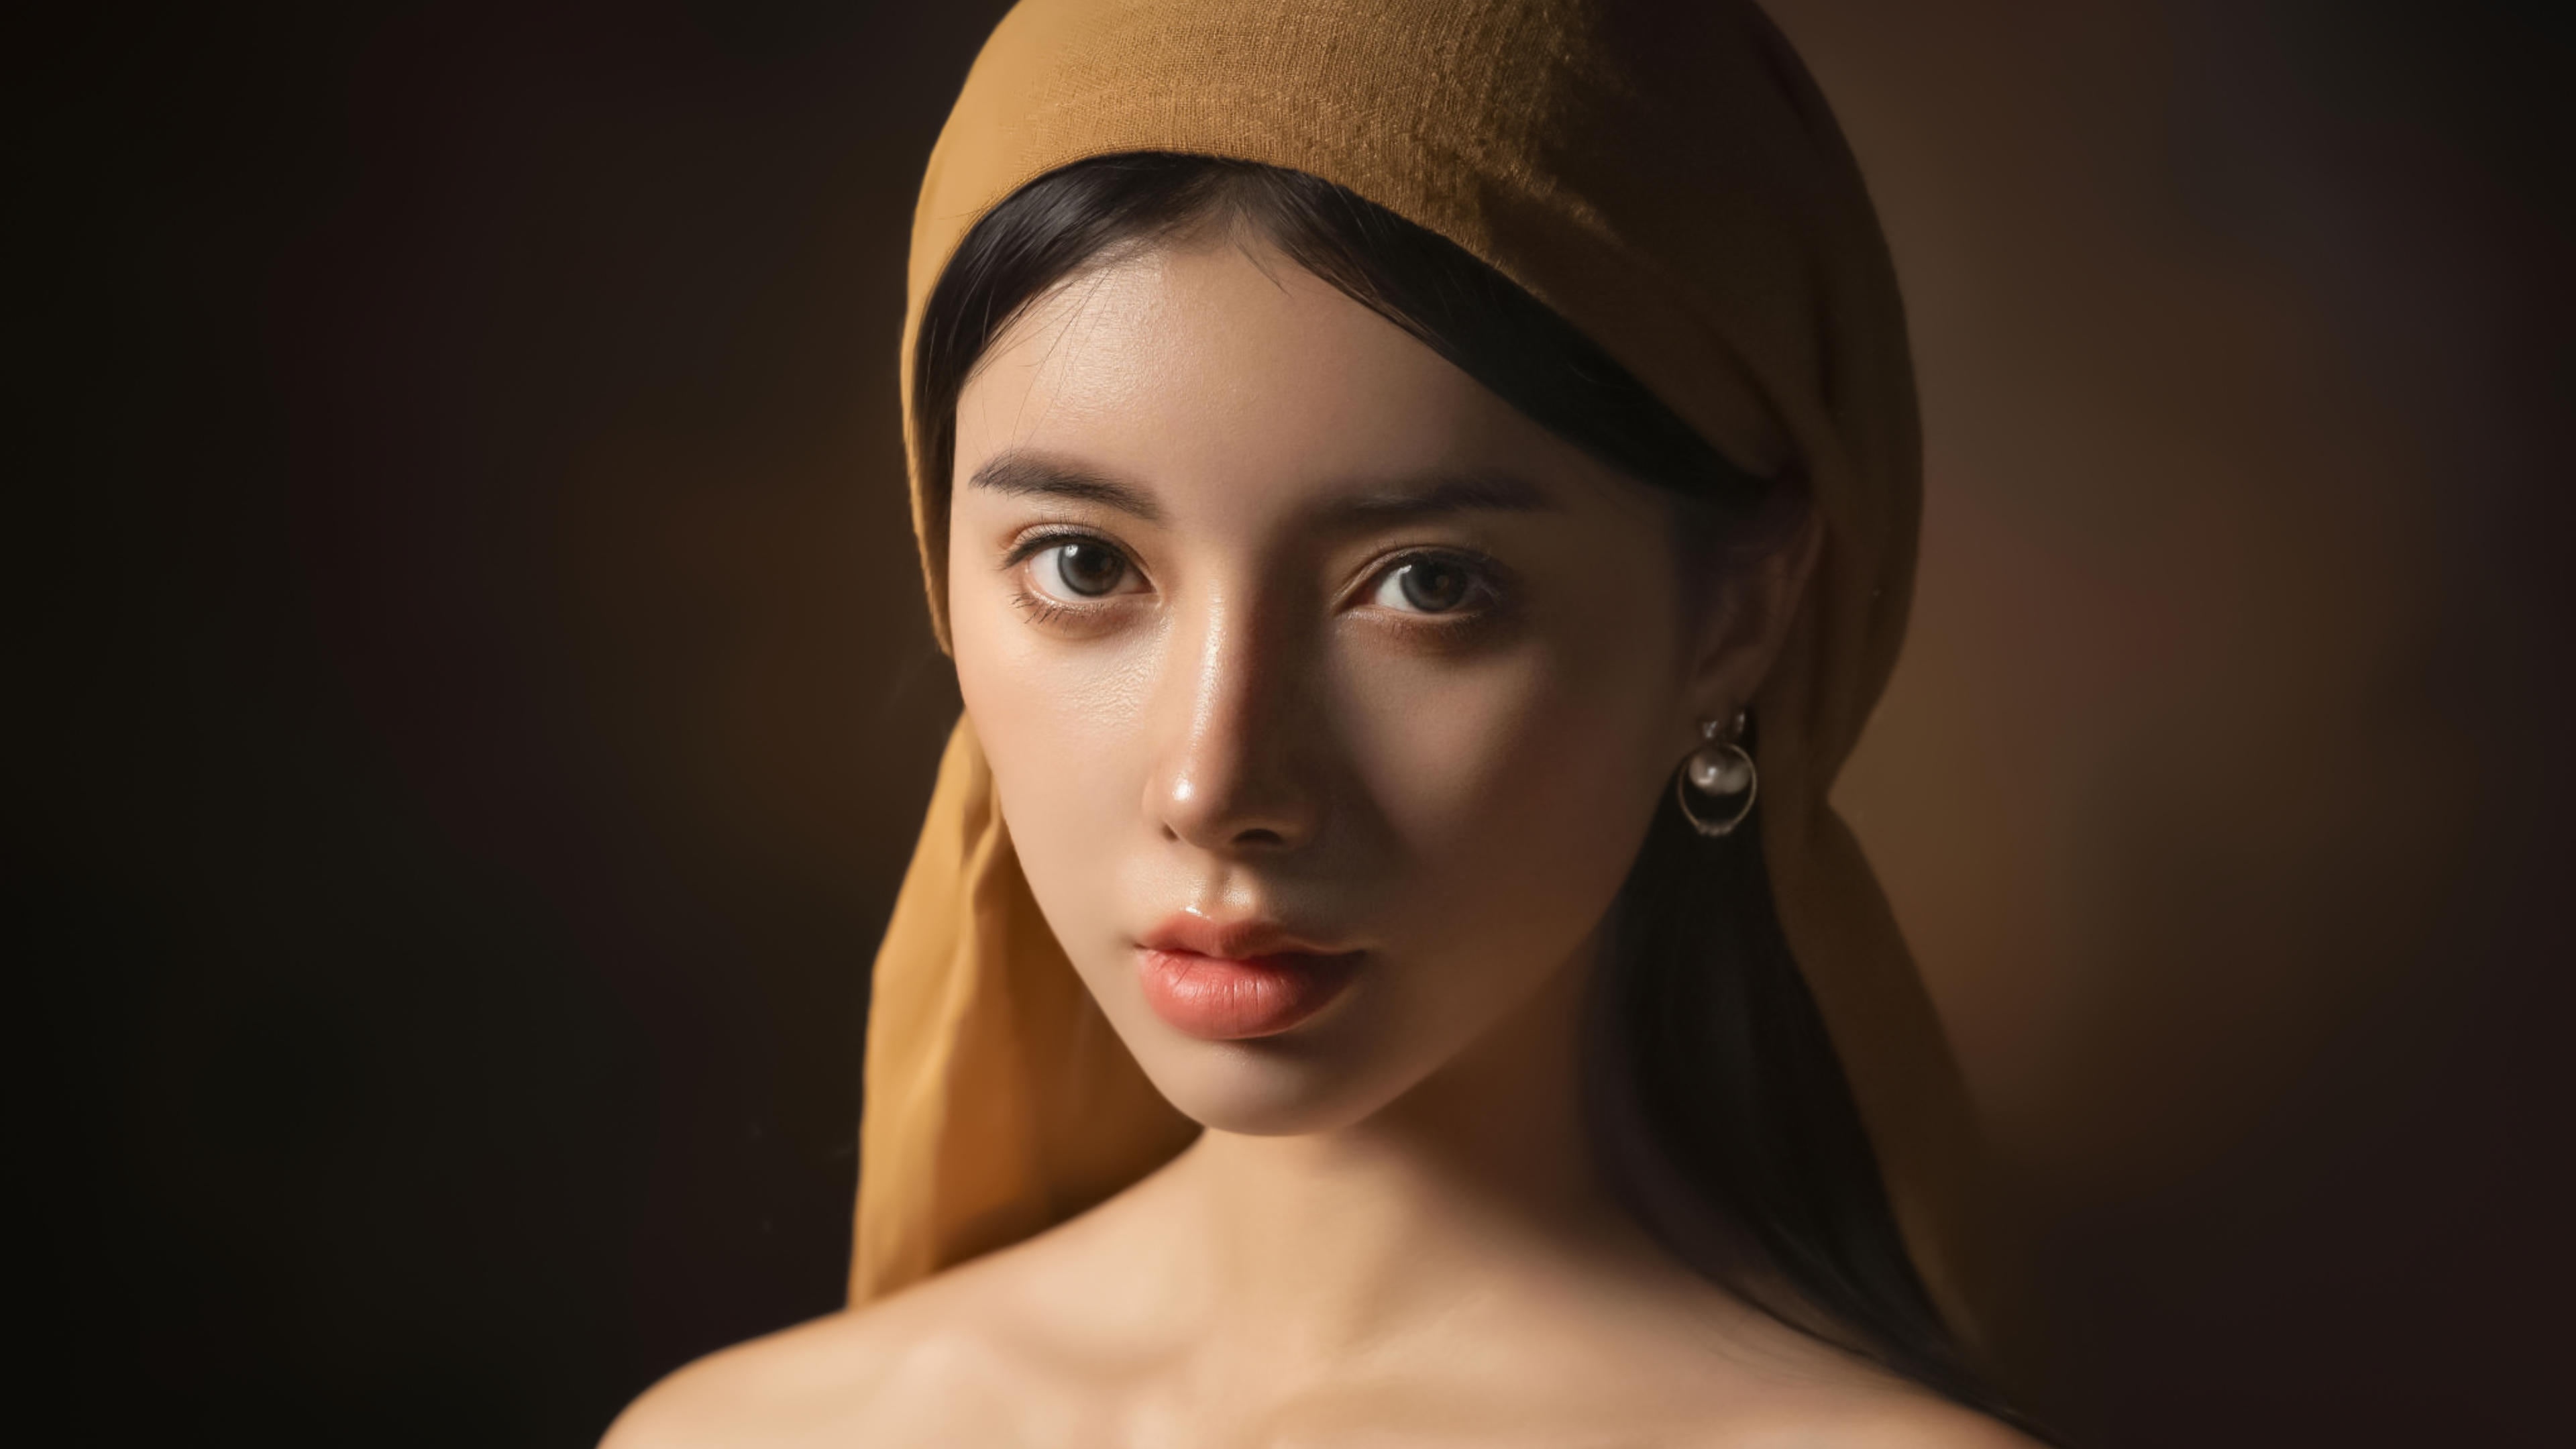 Model Women Asian Face Lee Hu Simple Background Portrait Closeup 3840x2160